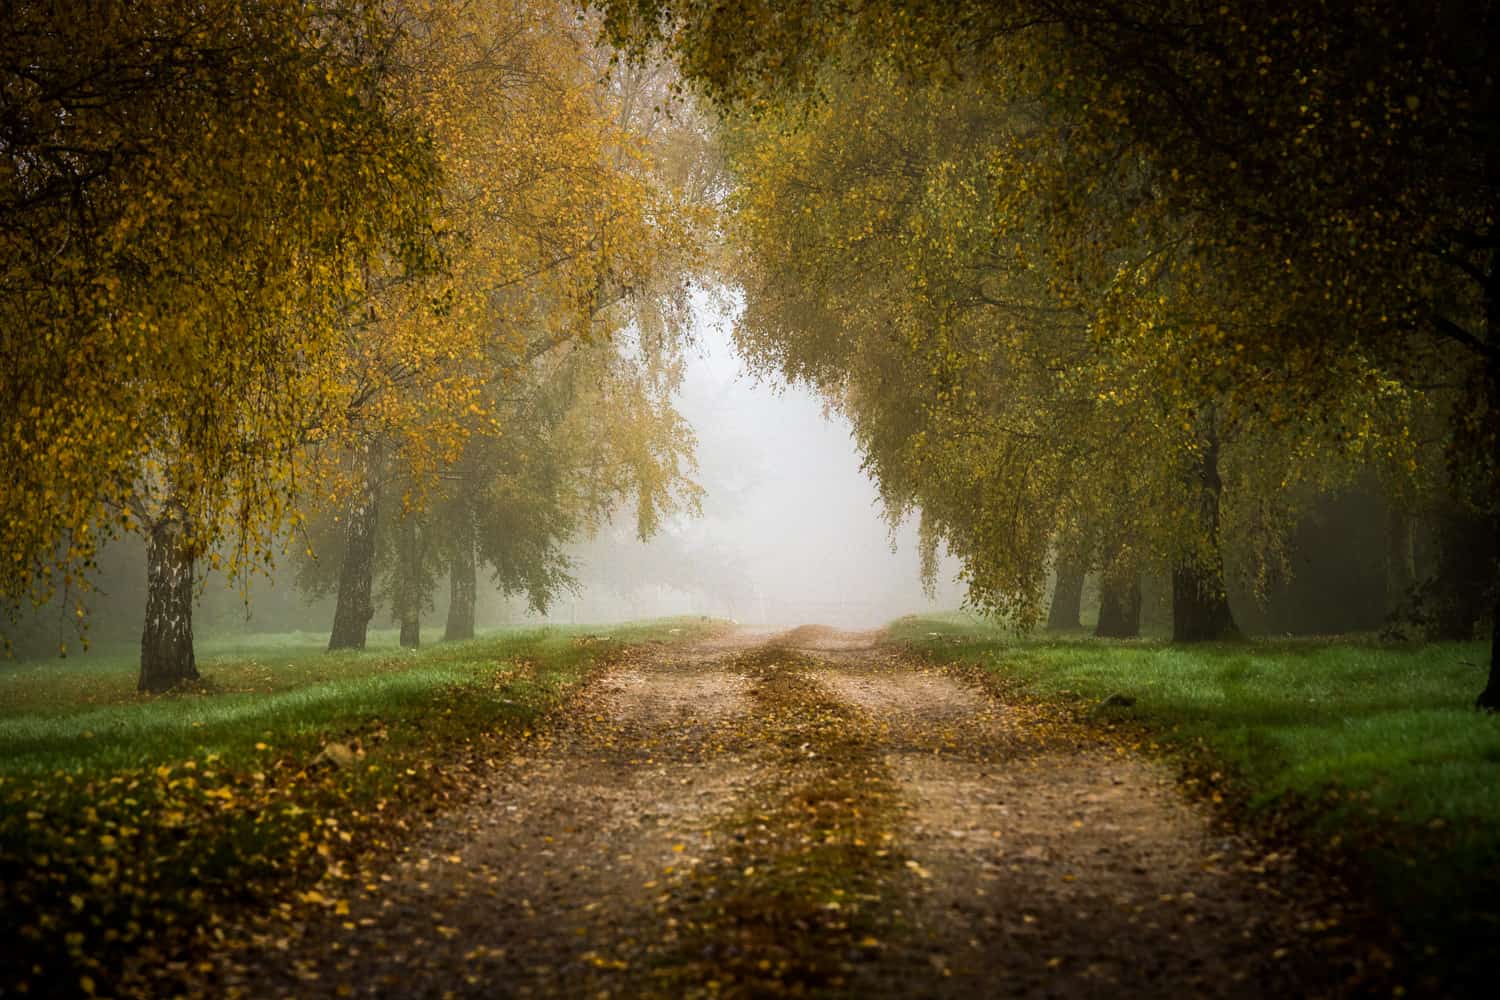  Misty Road, Hampshire - Hampshire photographs by Rick McEvoy 